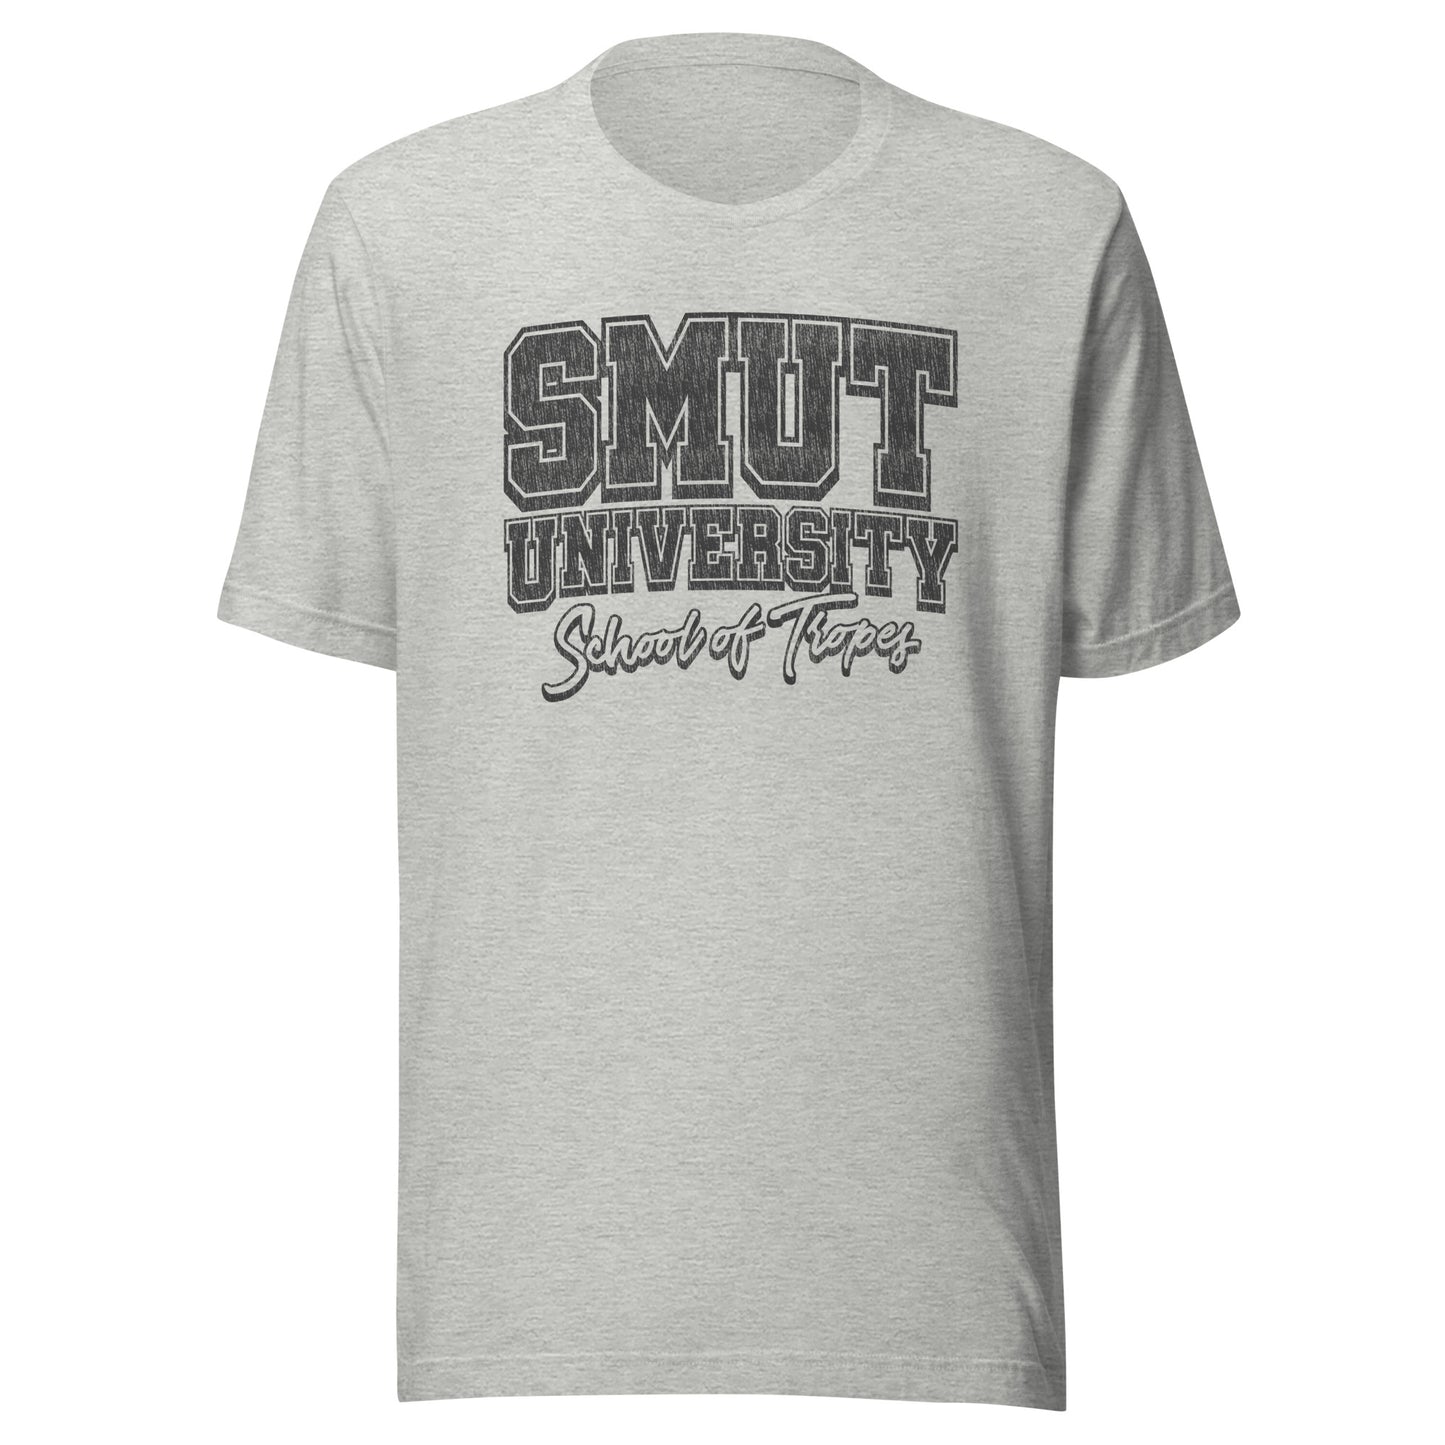 smut university t-shirt